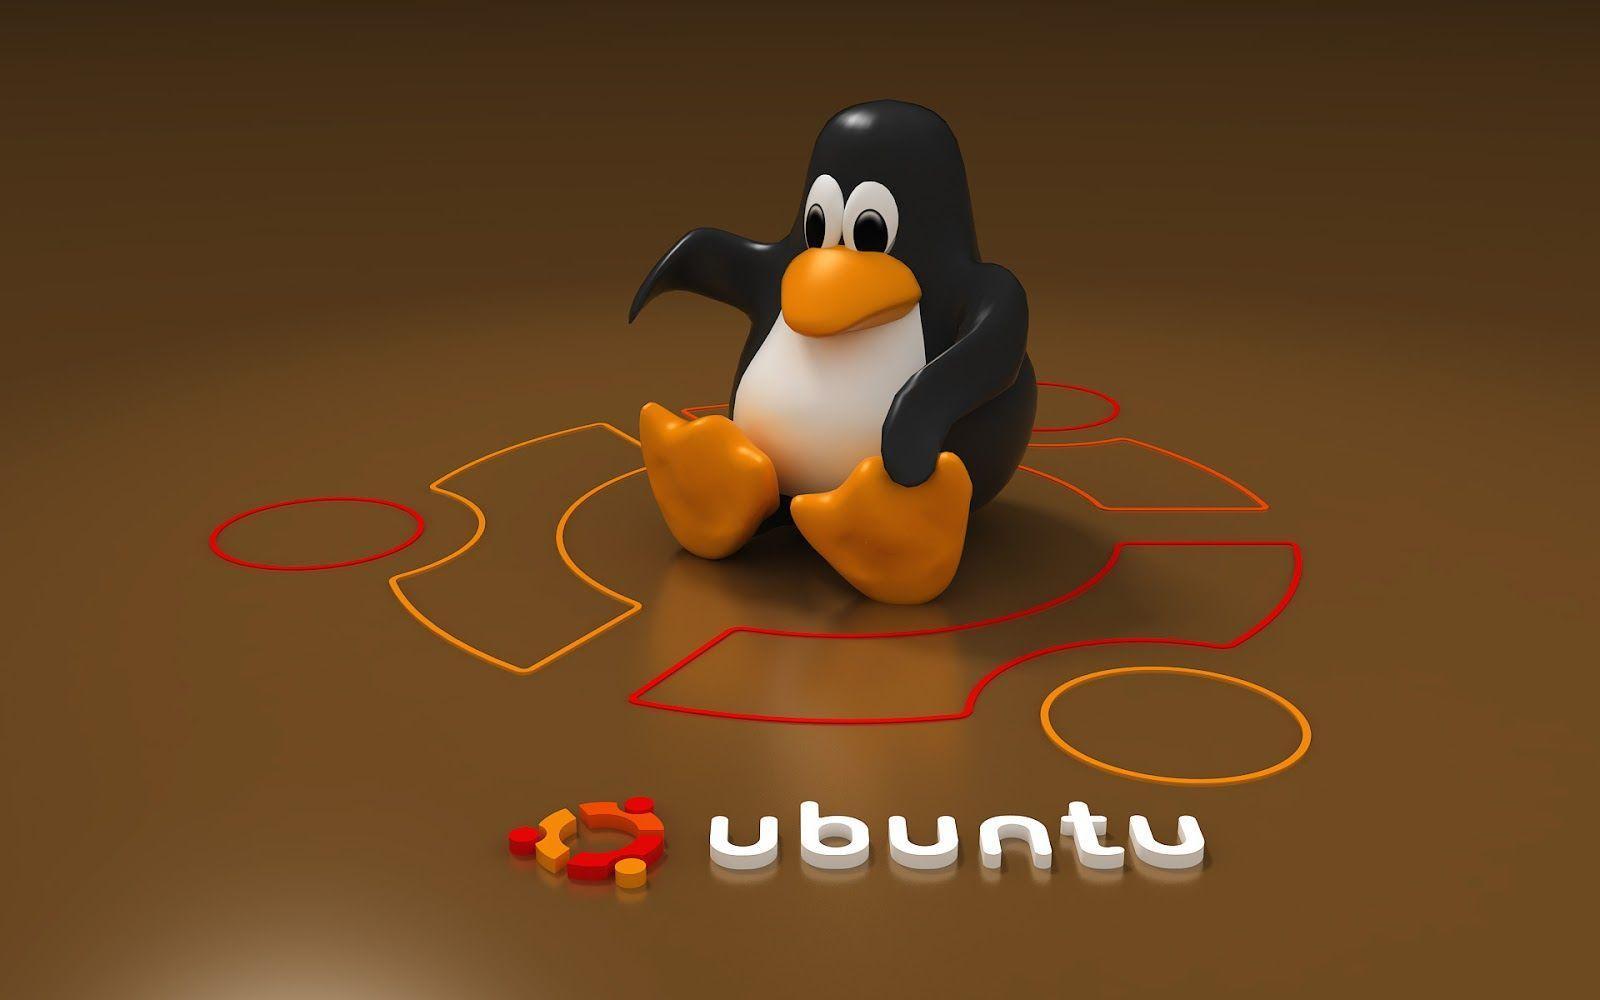 Ubuntu 3D Logos Wallpaper HD. Top HD Wallpaper